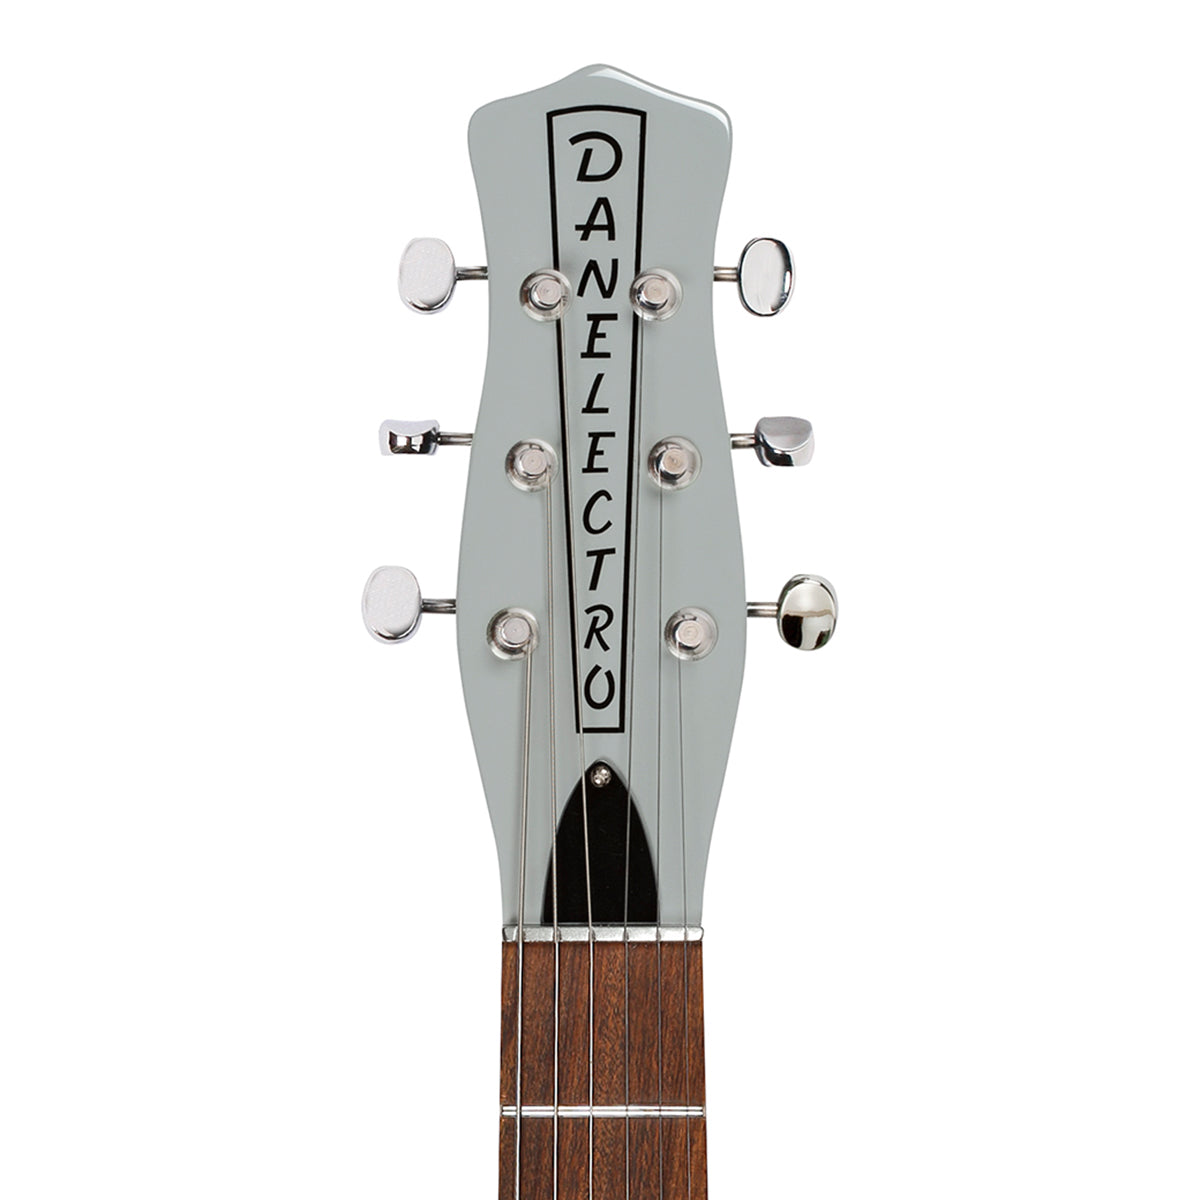 Danelectro '59M NOS Electric Guitar | Ice Grey